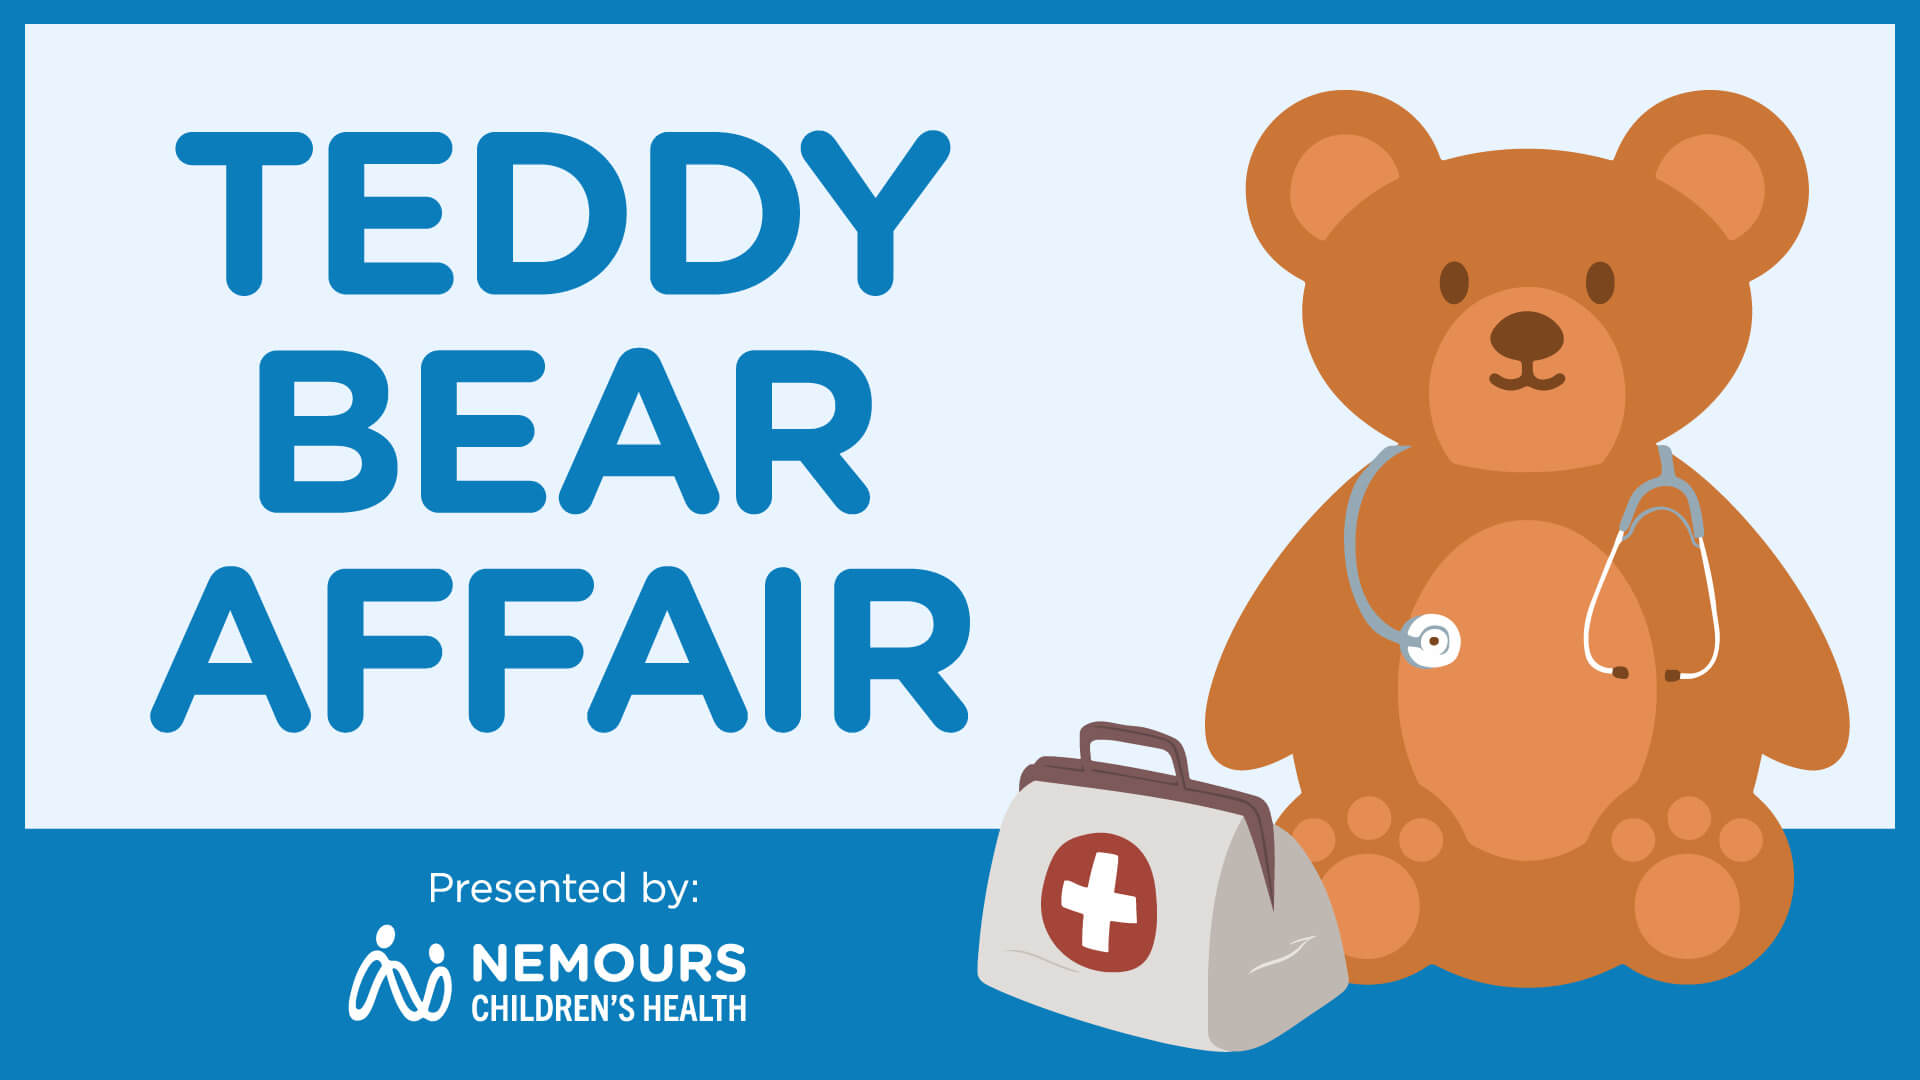 Teddy Bear Affair - Presented by Nemours Children's Health